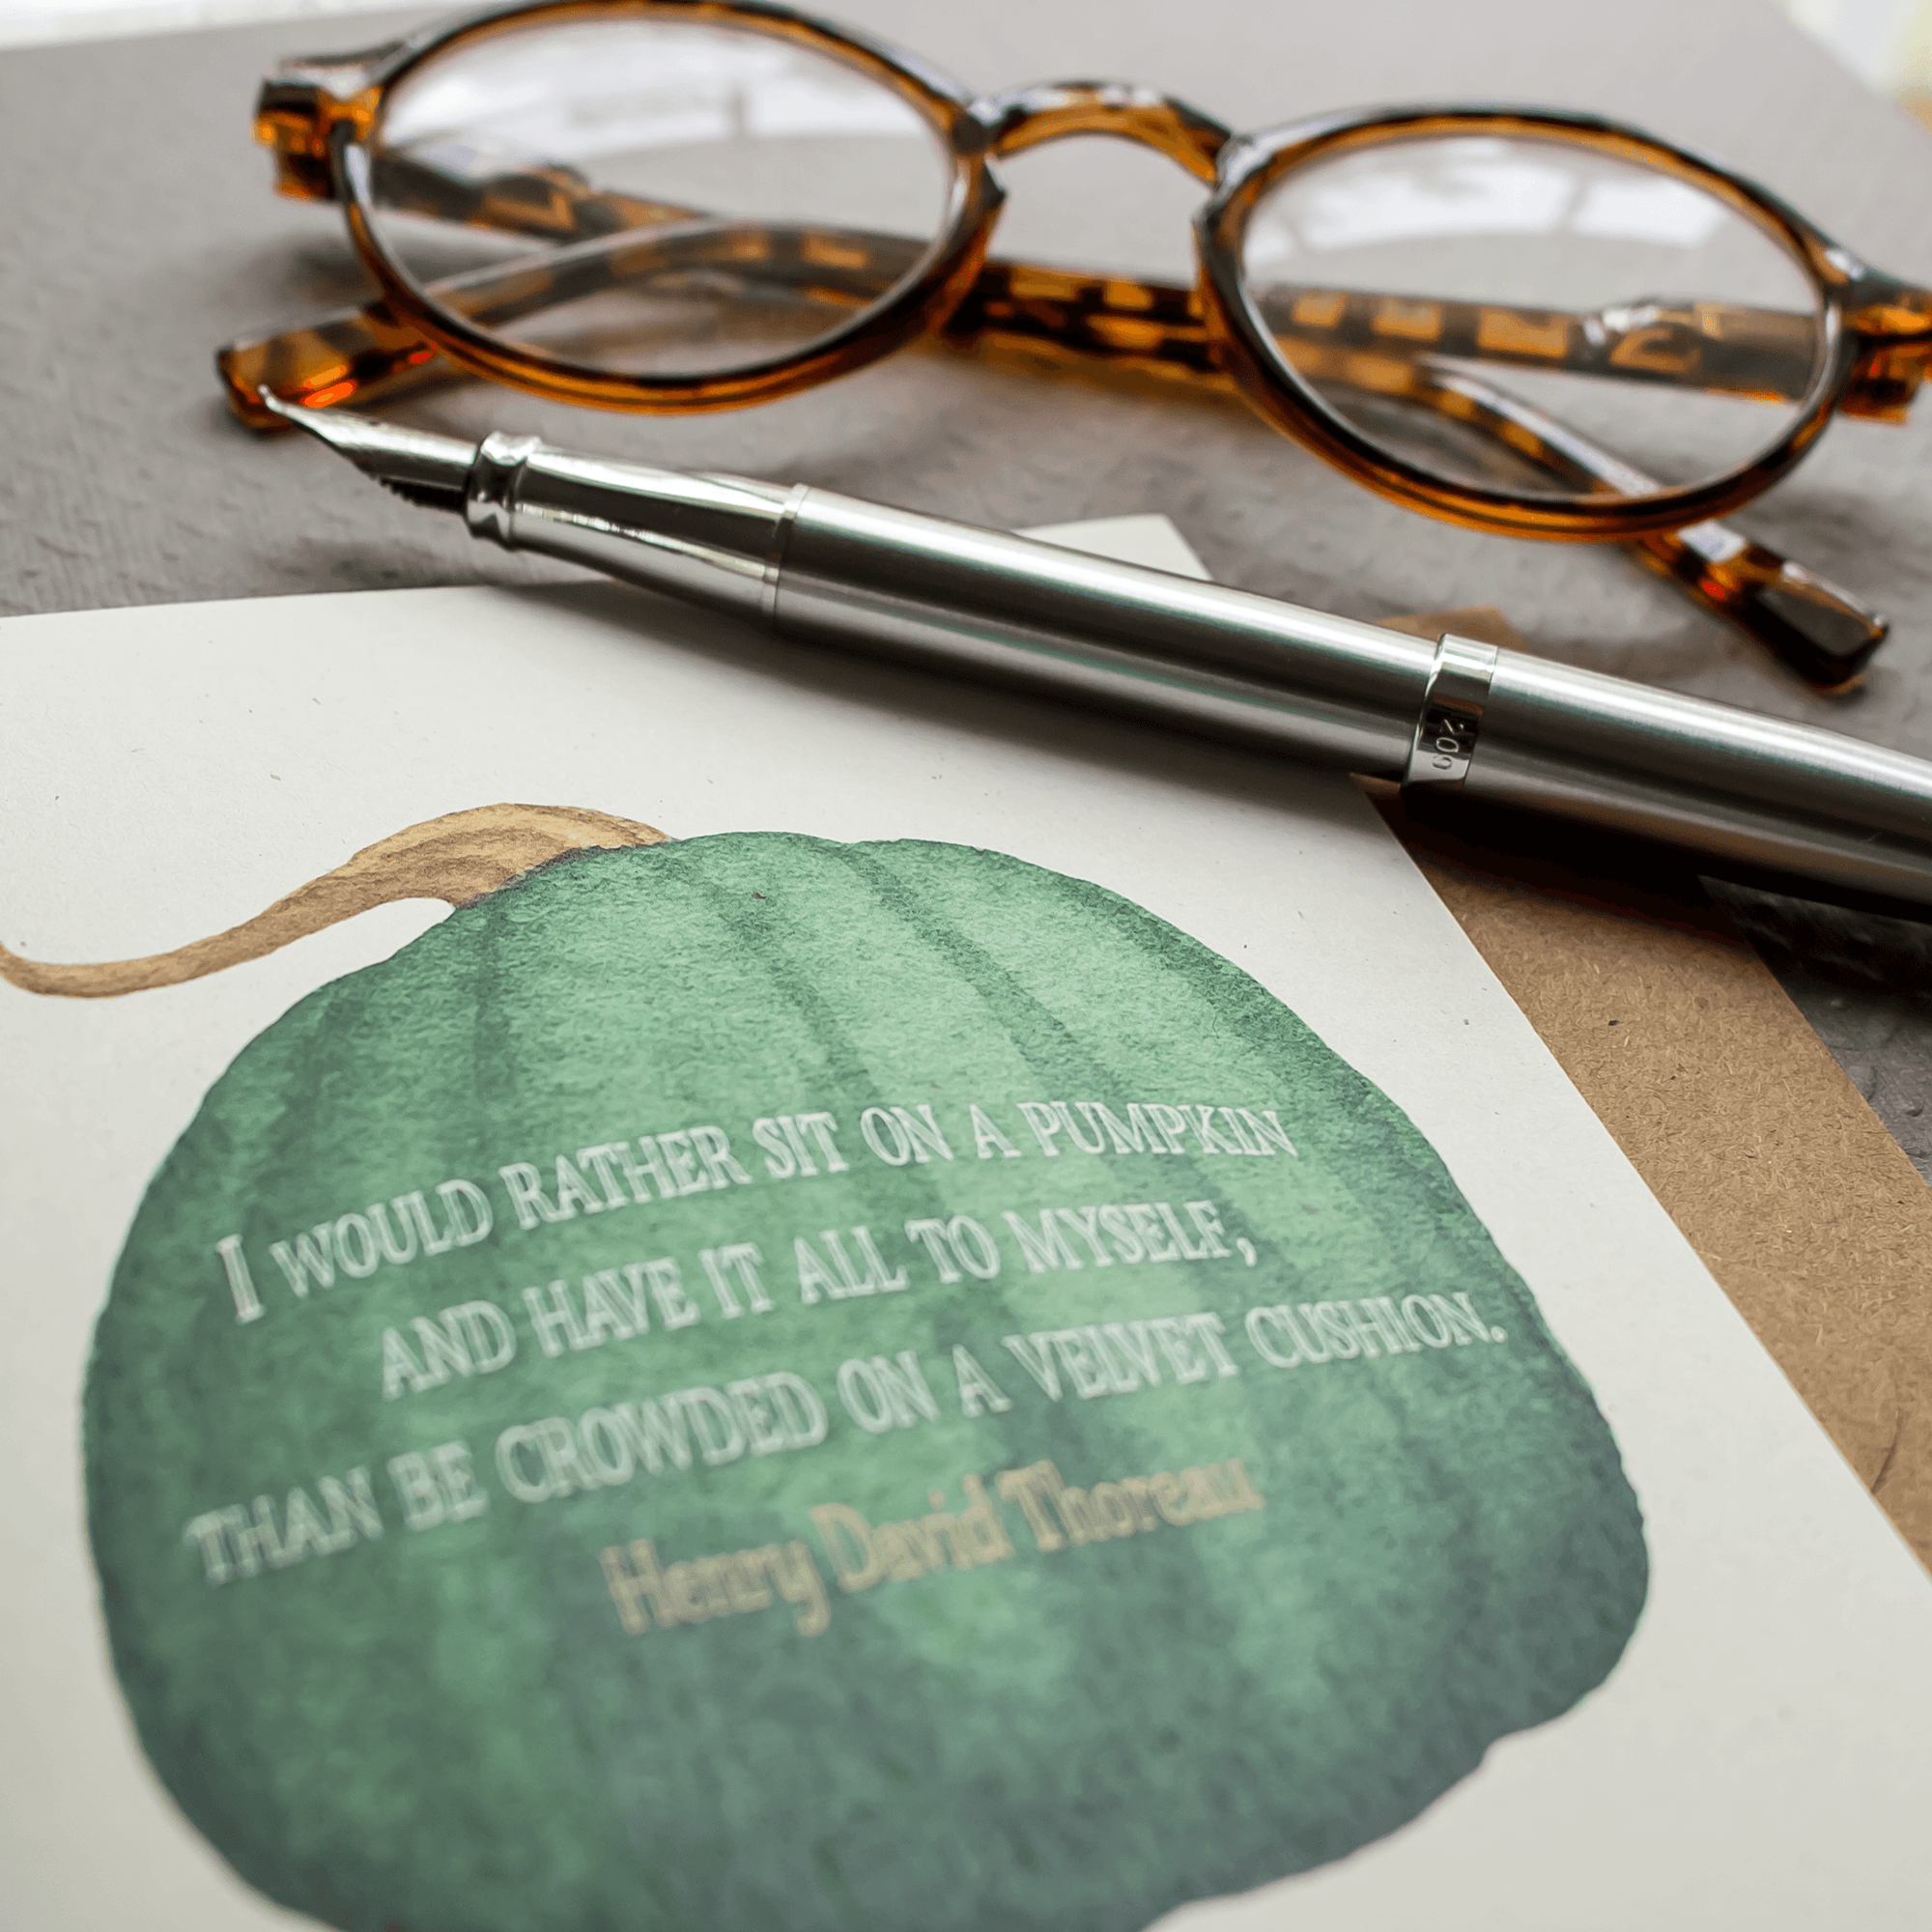 Autumn Greeting Card - Henry David Thoreau Quote - Sunshine and Ravioli